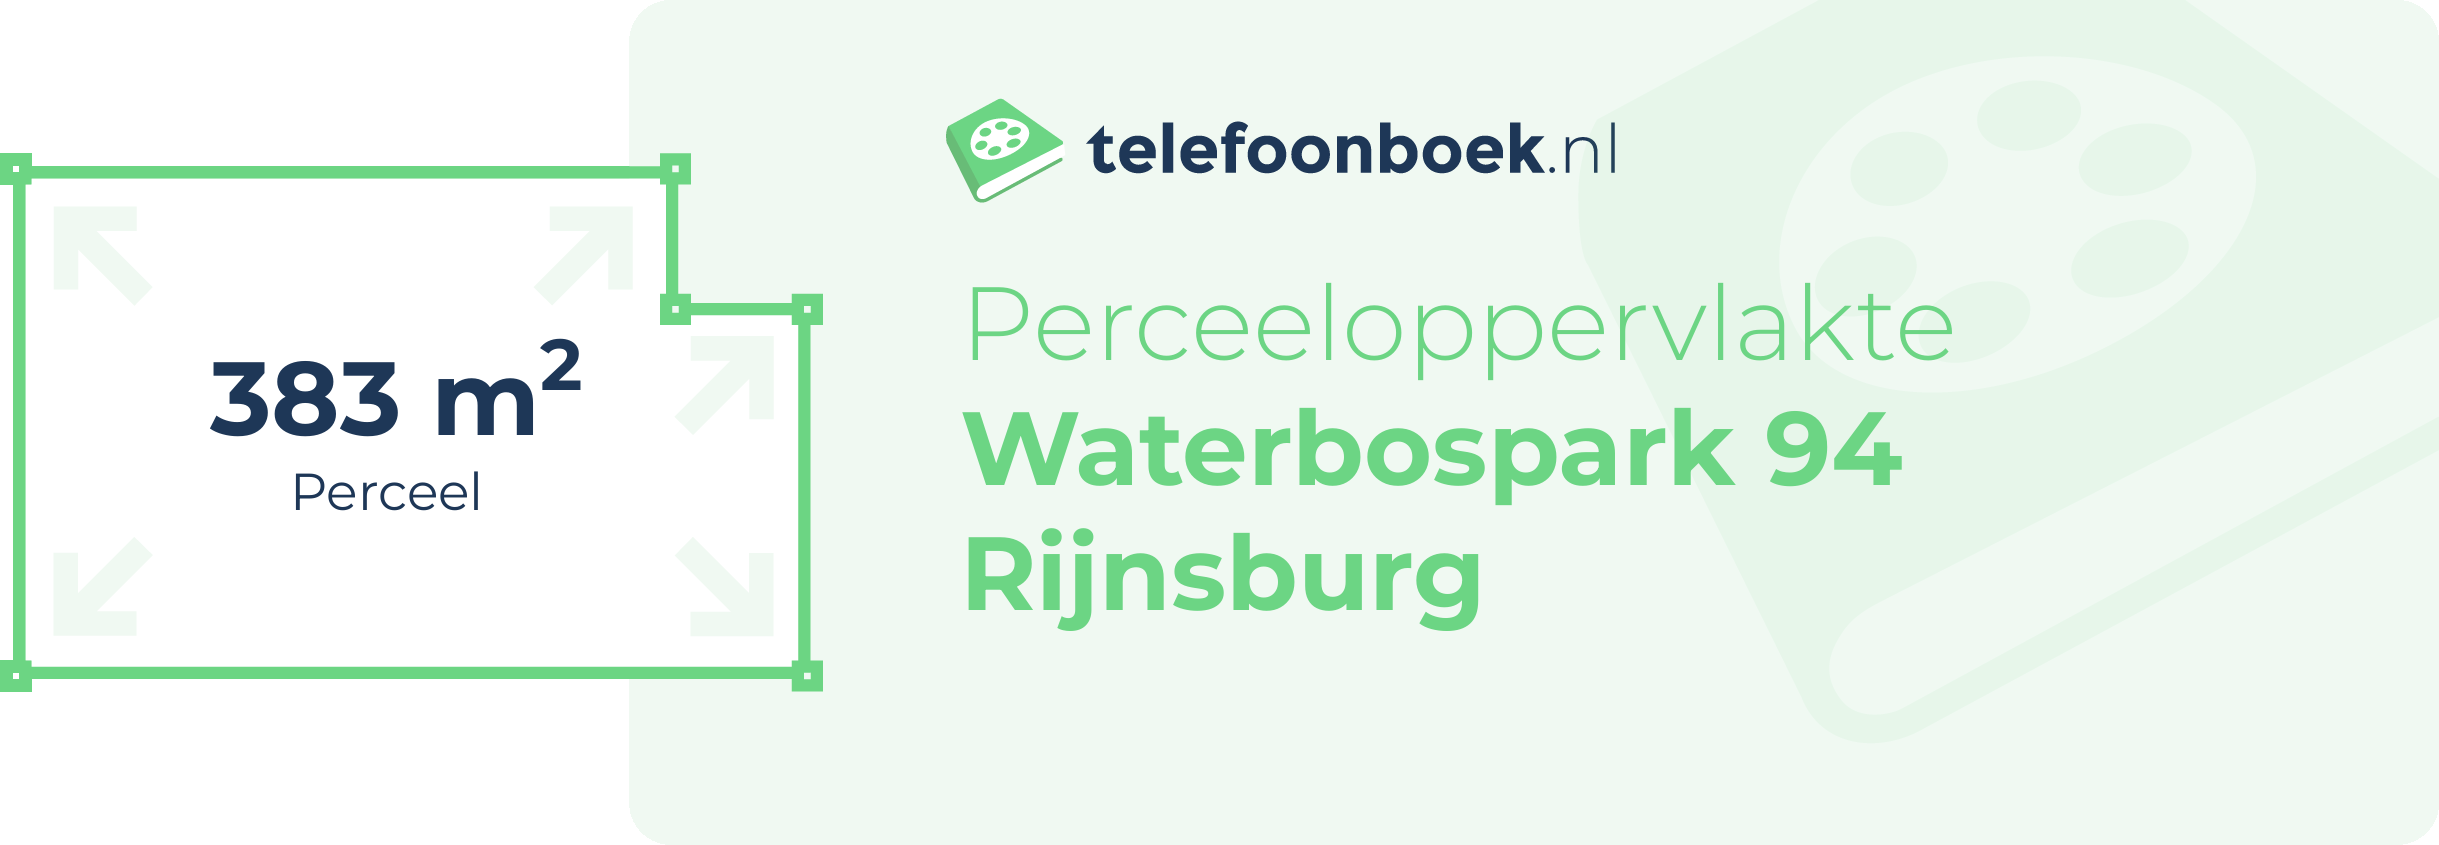 Perceeloppervlakte Waterbospark 94 Rijnsburg